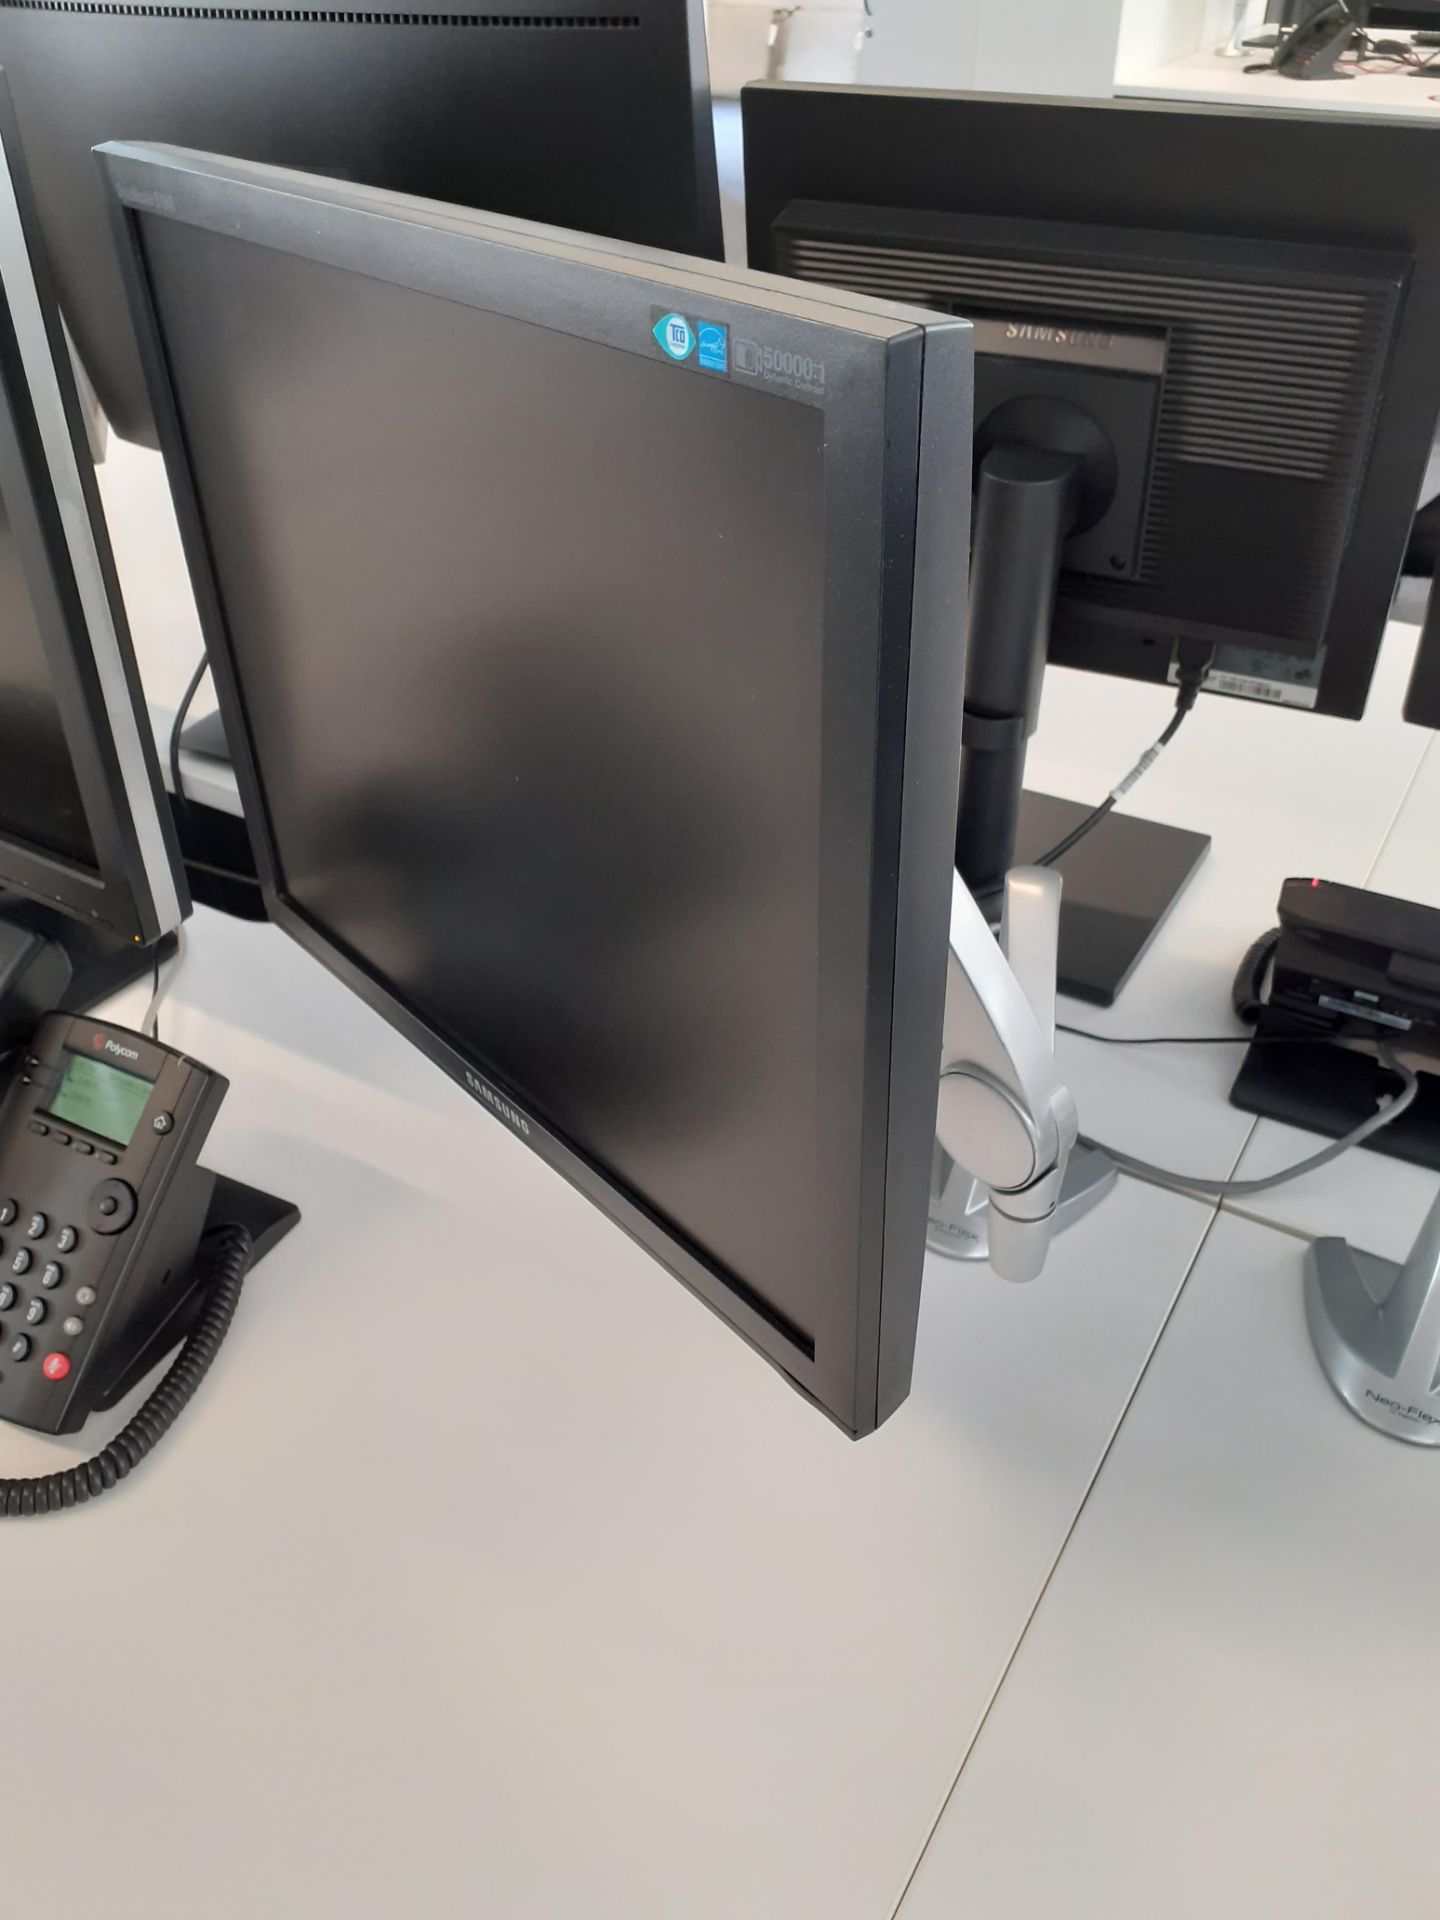 2 Ergotron Neo-Flex Desk Mount Monitor Brackets with 2 x Samsung Syncmaster B1940 Computer Monitors - Image 2 of 2